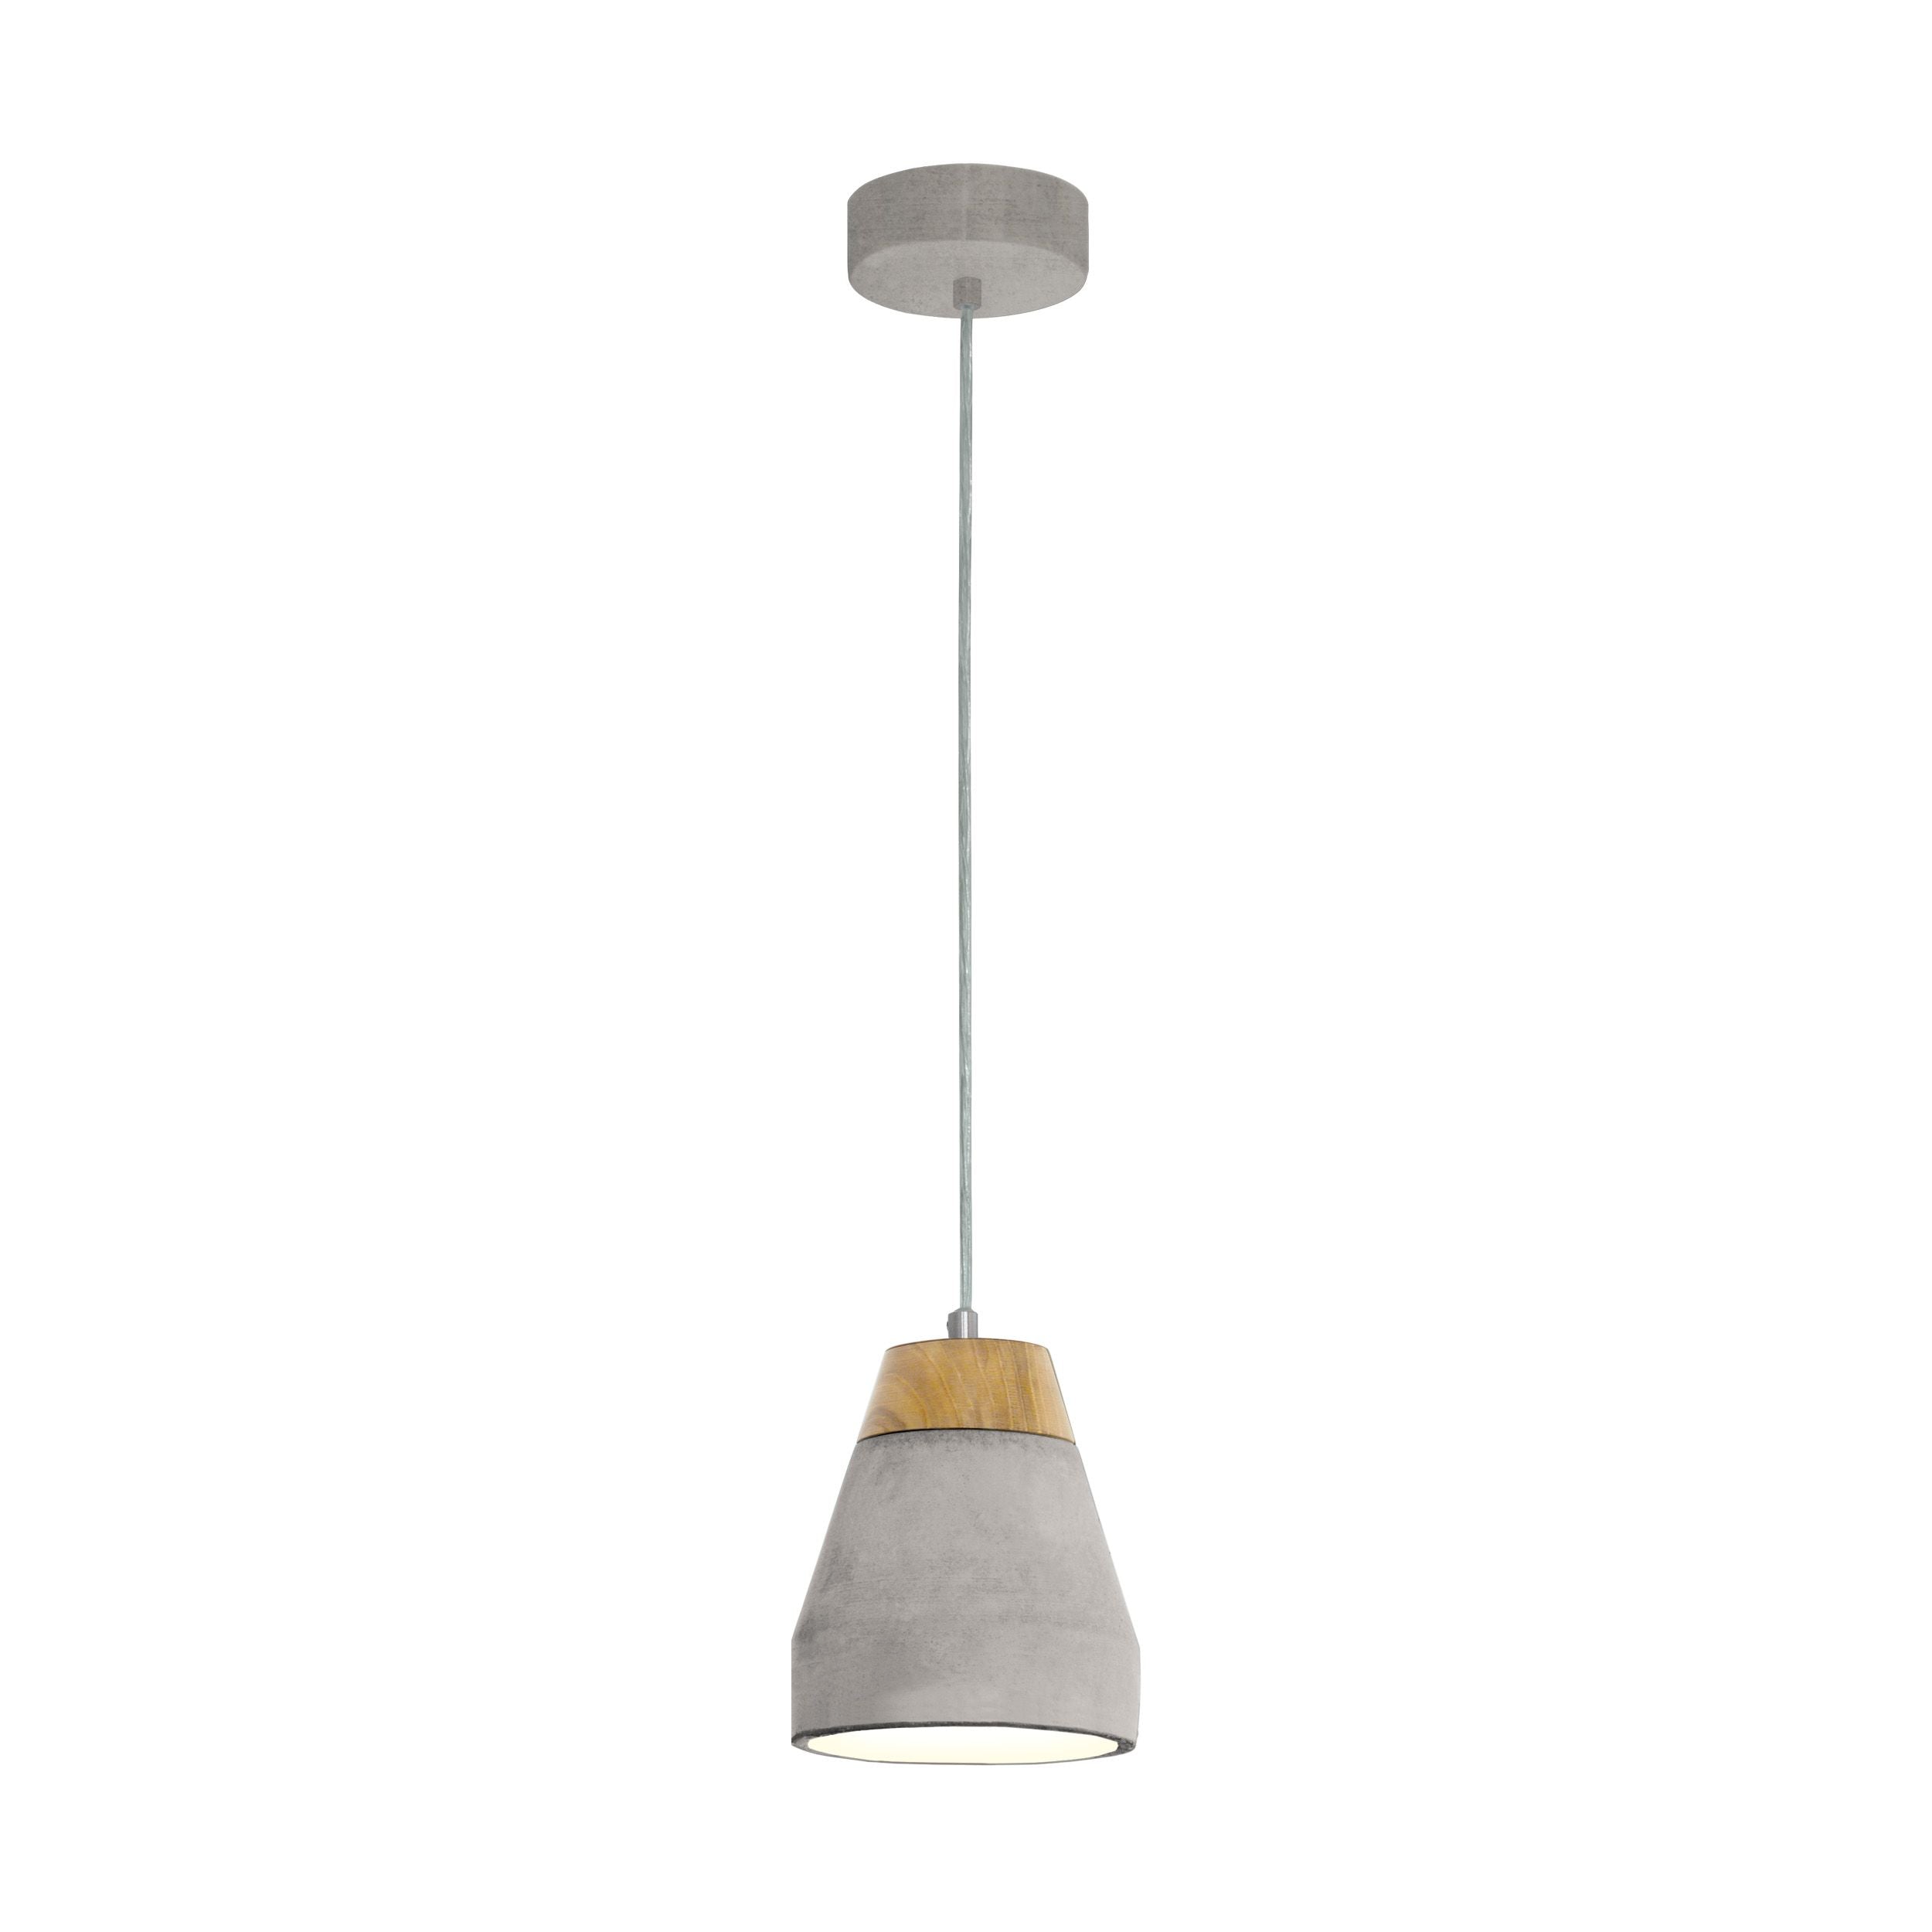 Eglo Lighting TAREGA pendant light grey steel, grey concrete and wood